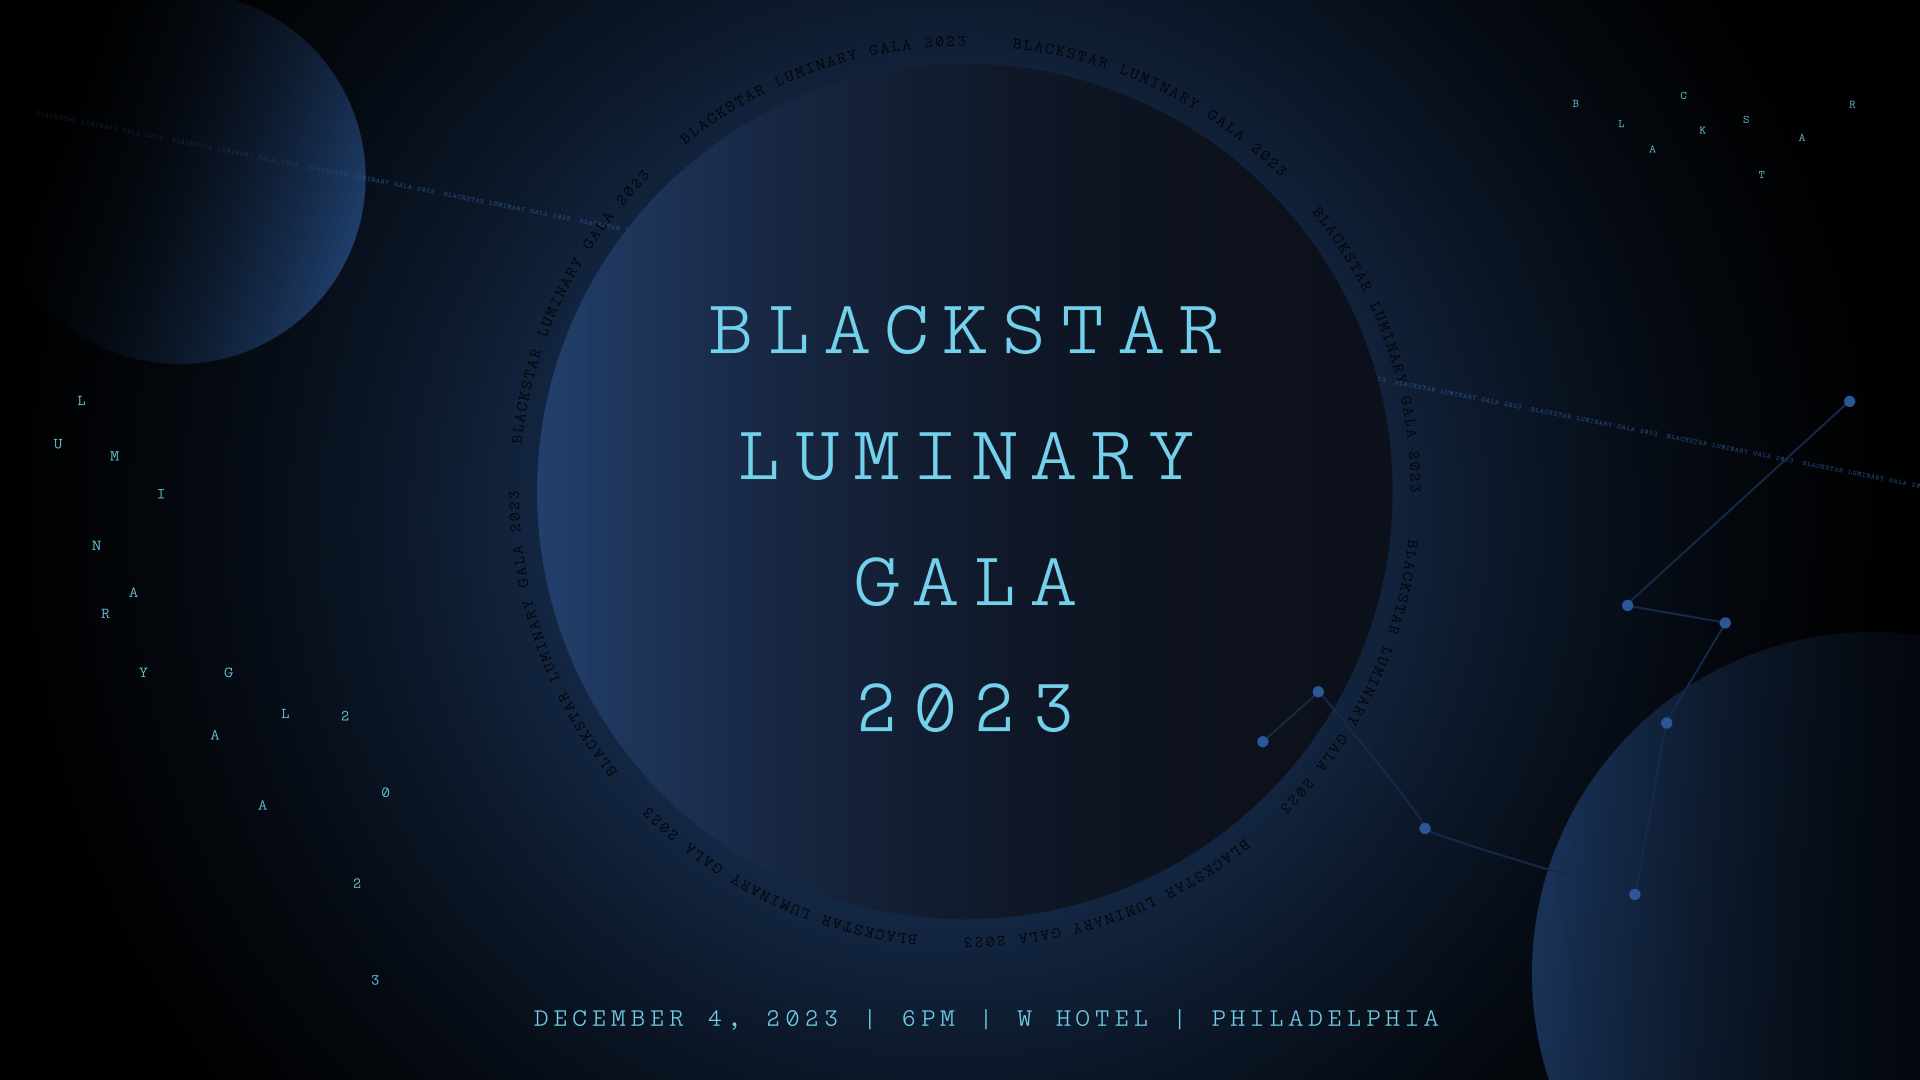 BlackStar Luminary Gala 2023